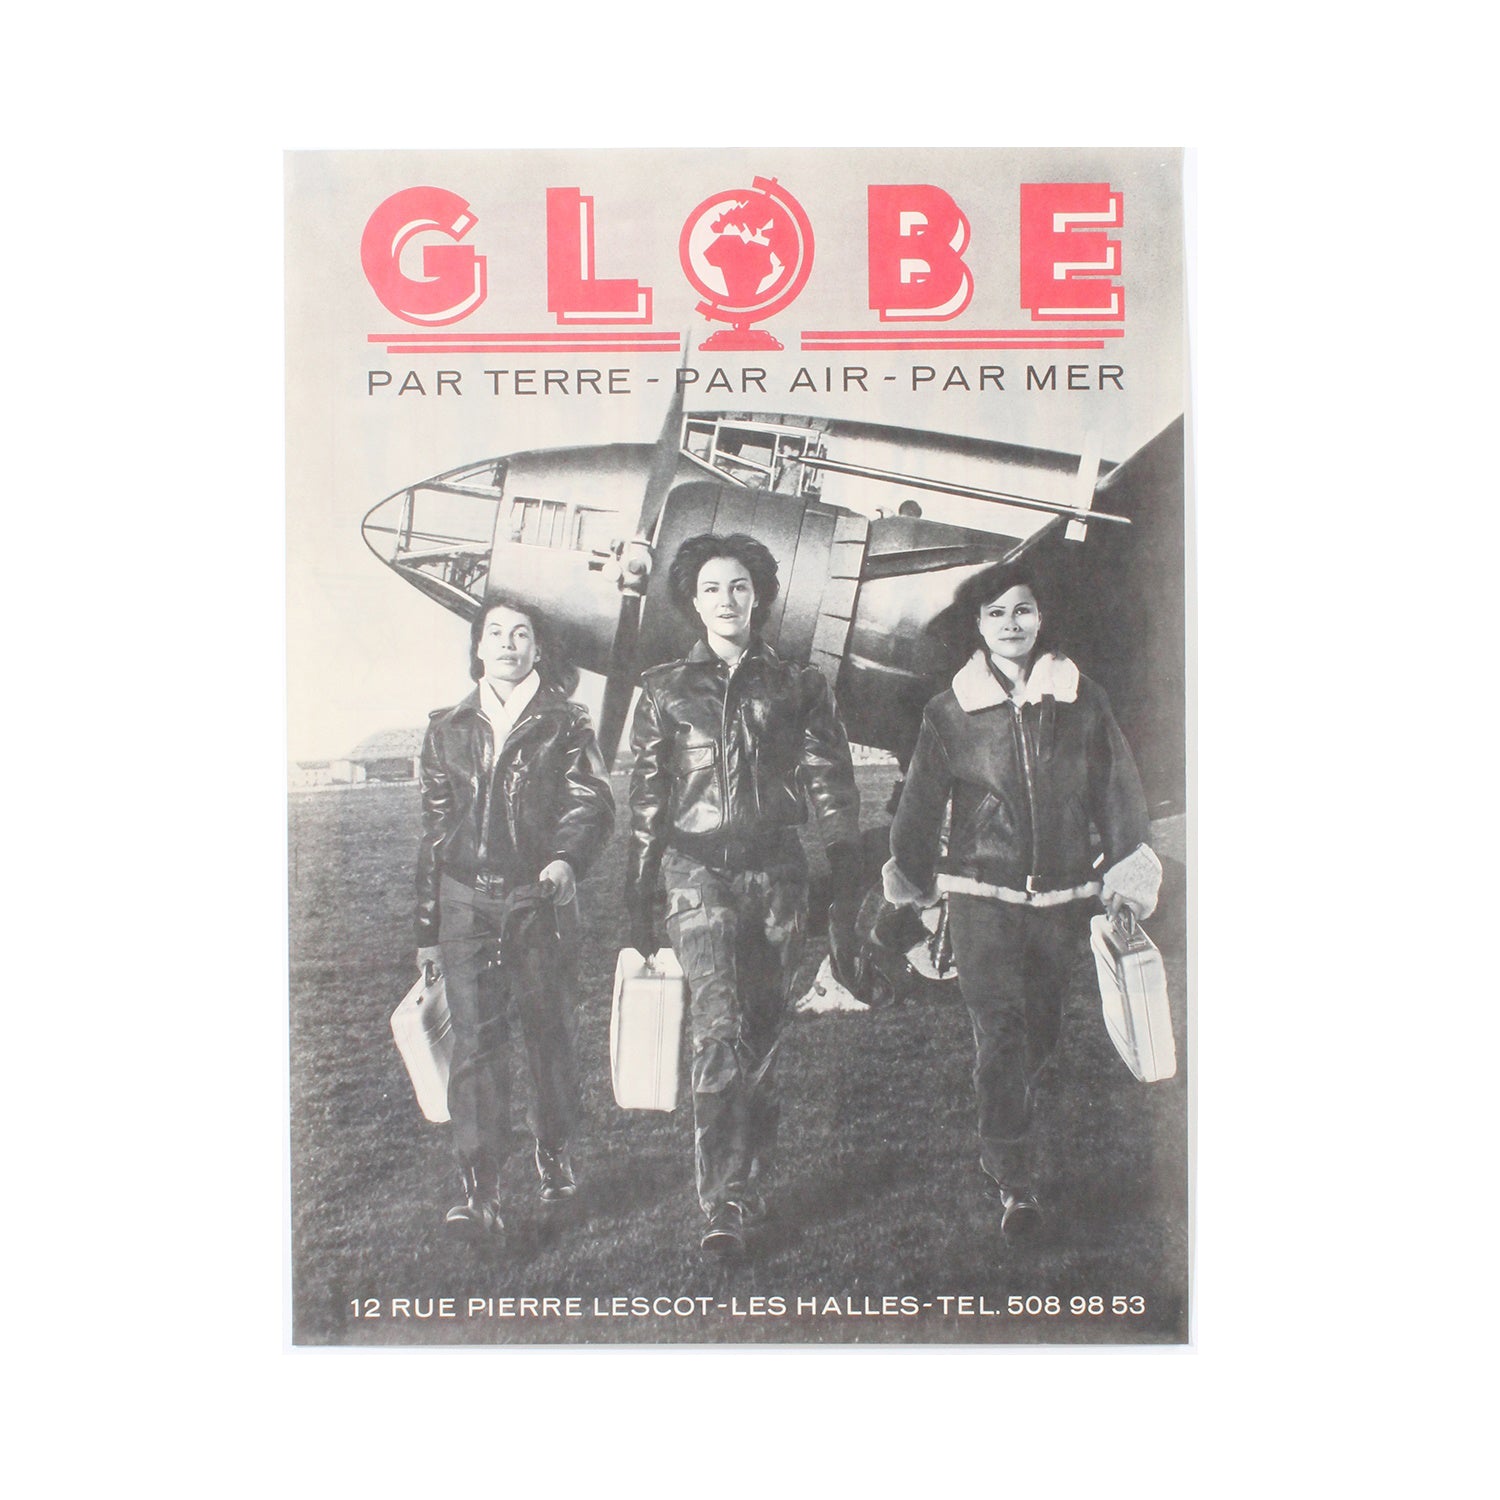 Globe Poster 2P